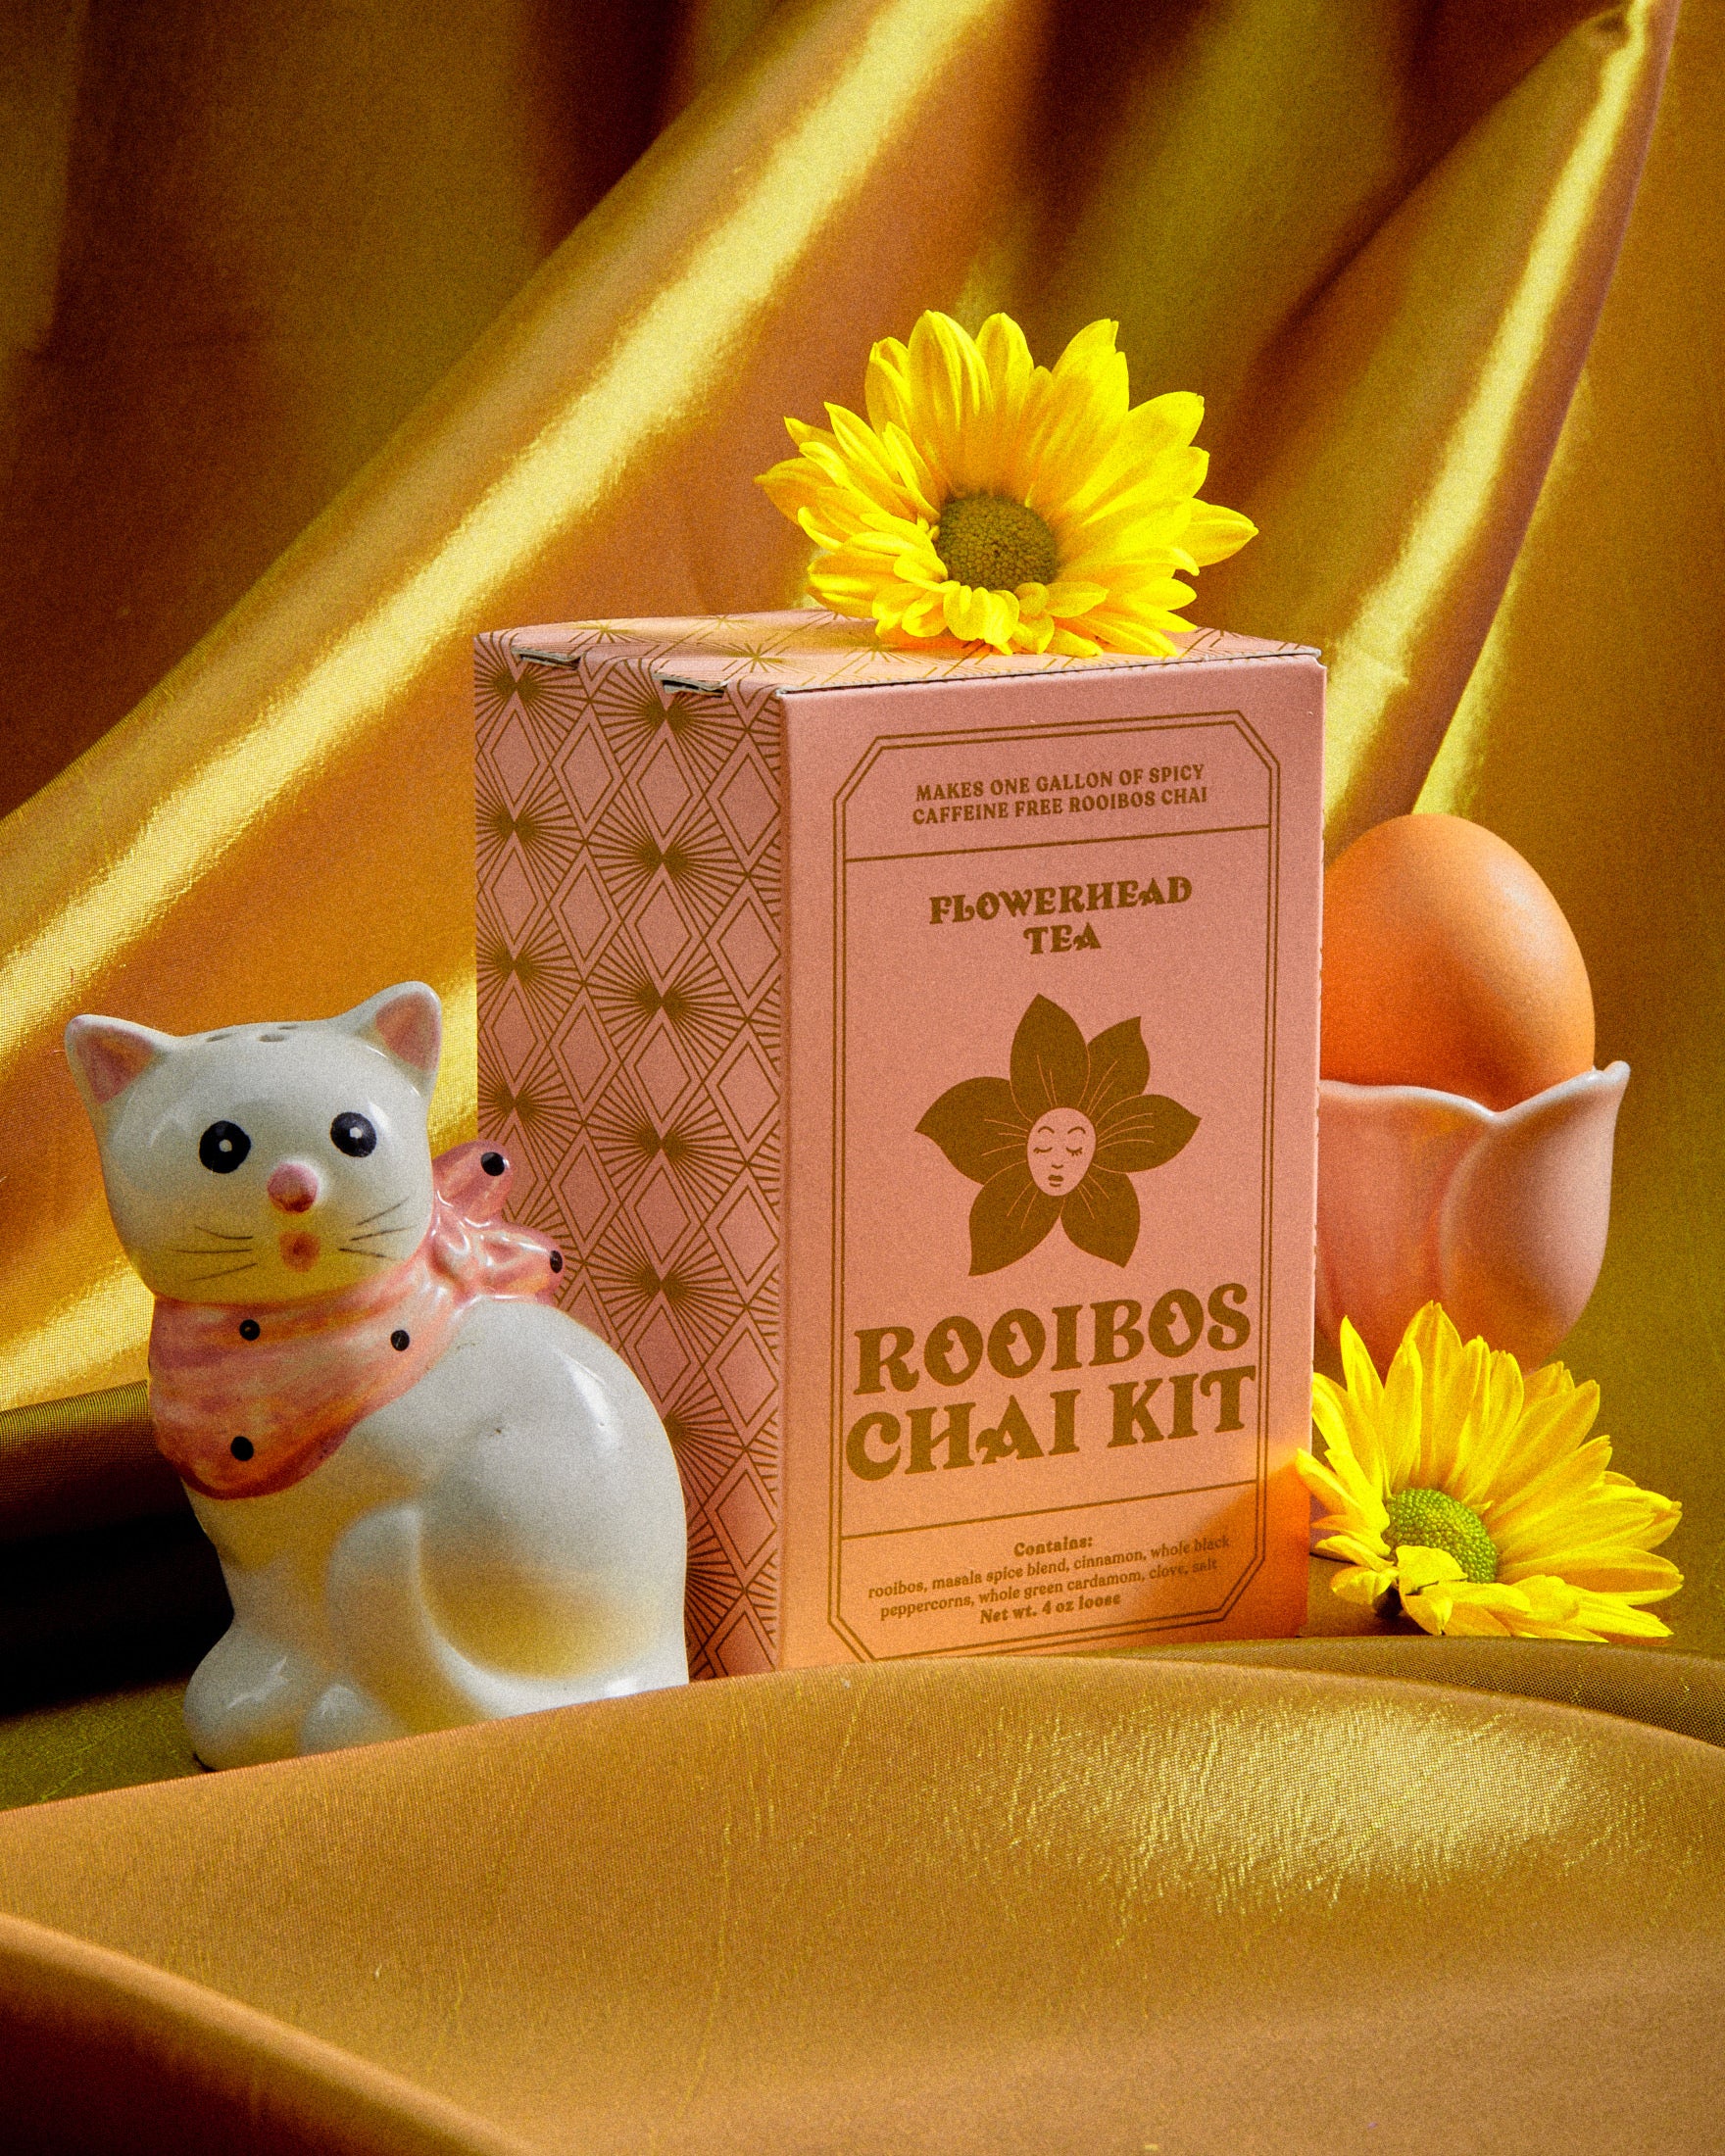 Rooibos – World Spice